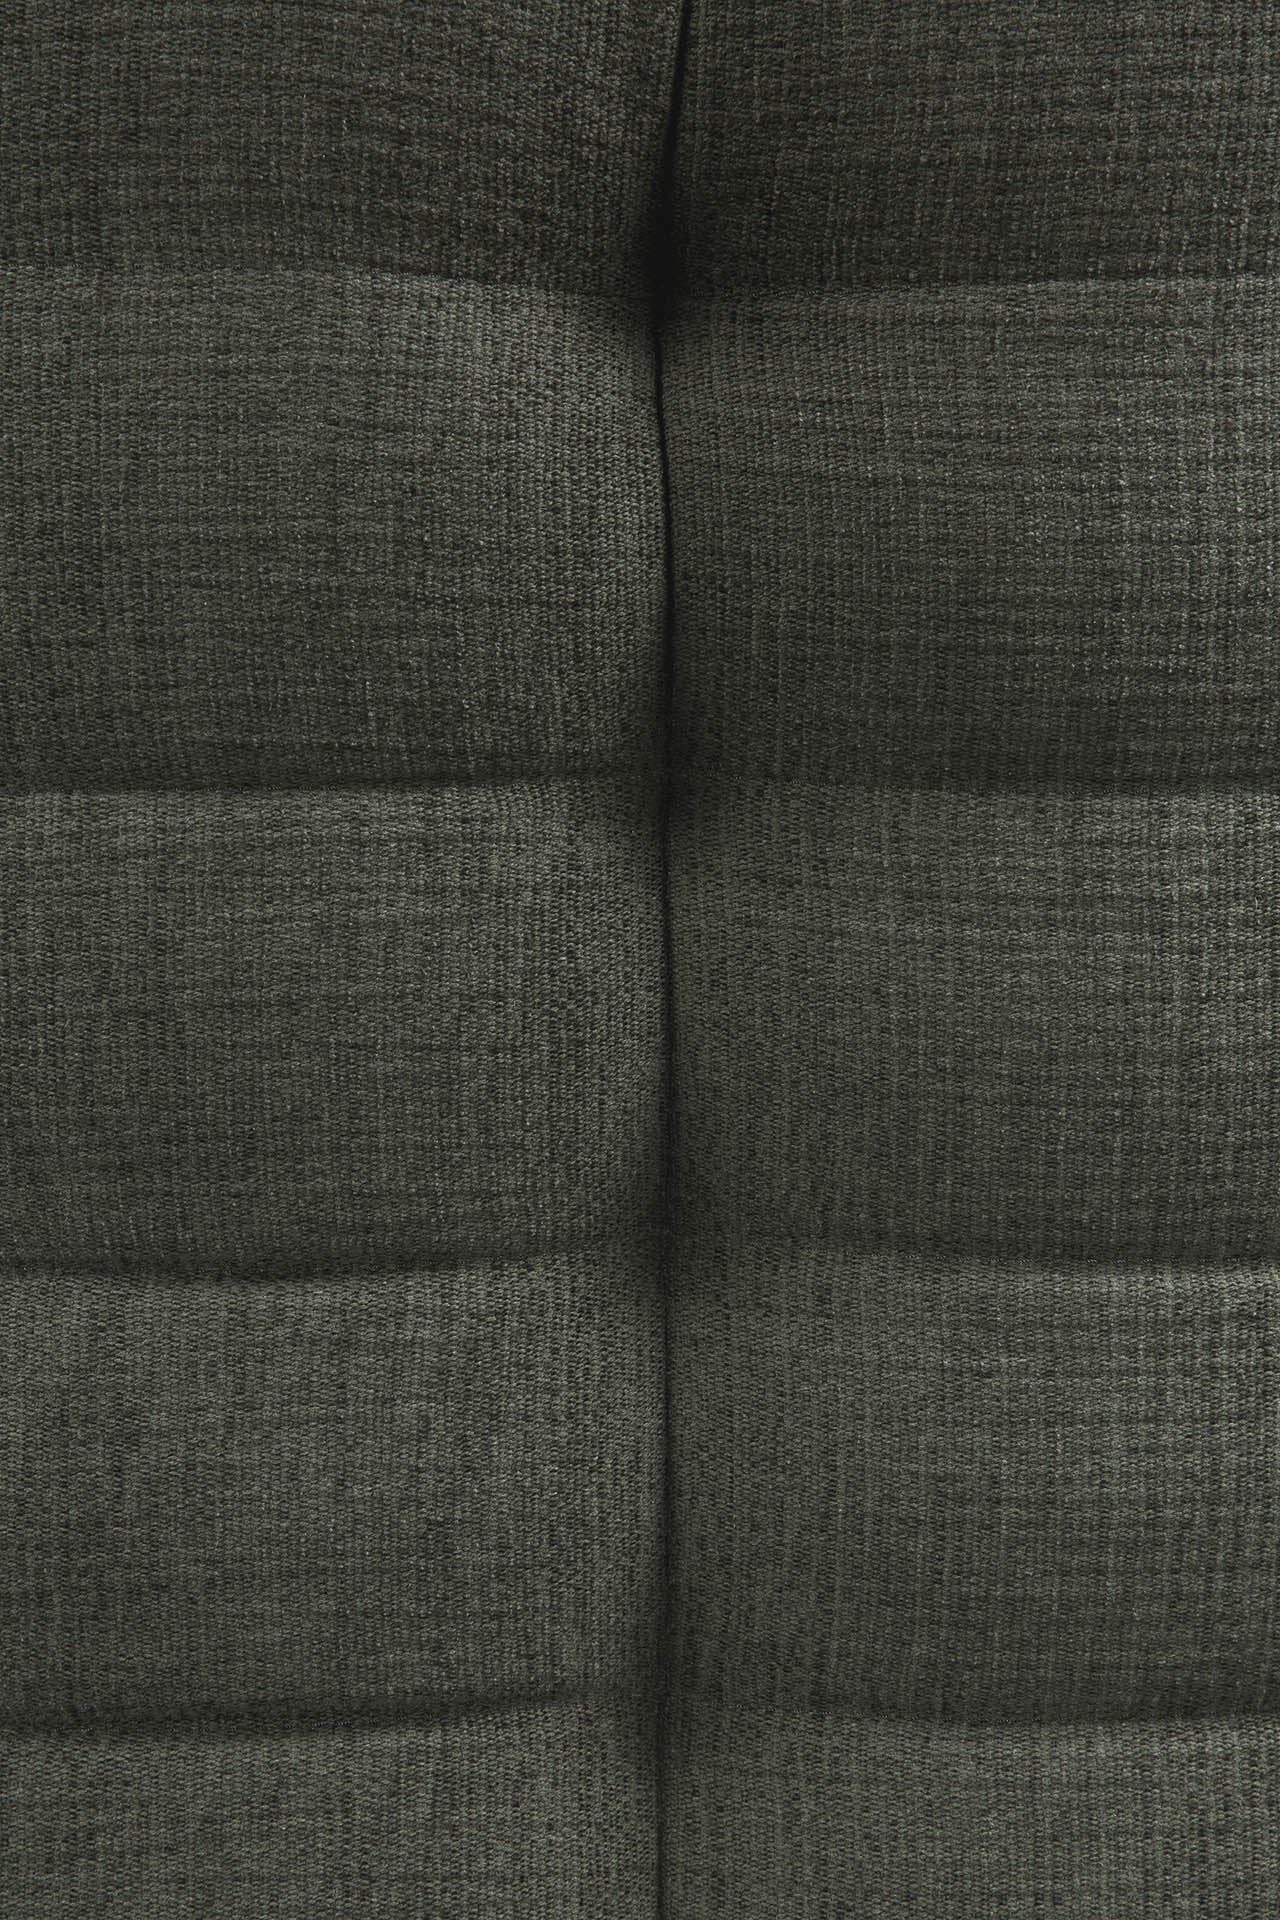 N701 Single Seater Eco Fabric Sofa, Moss